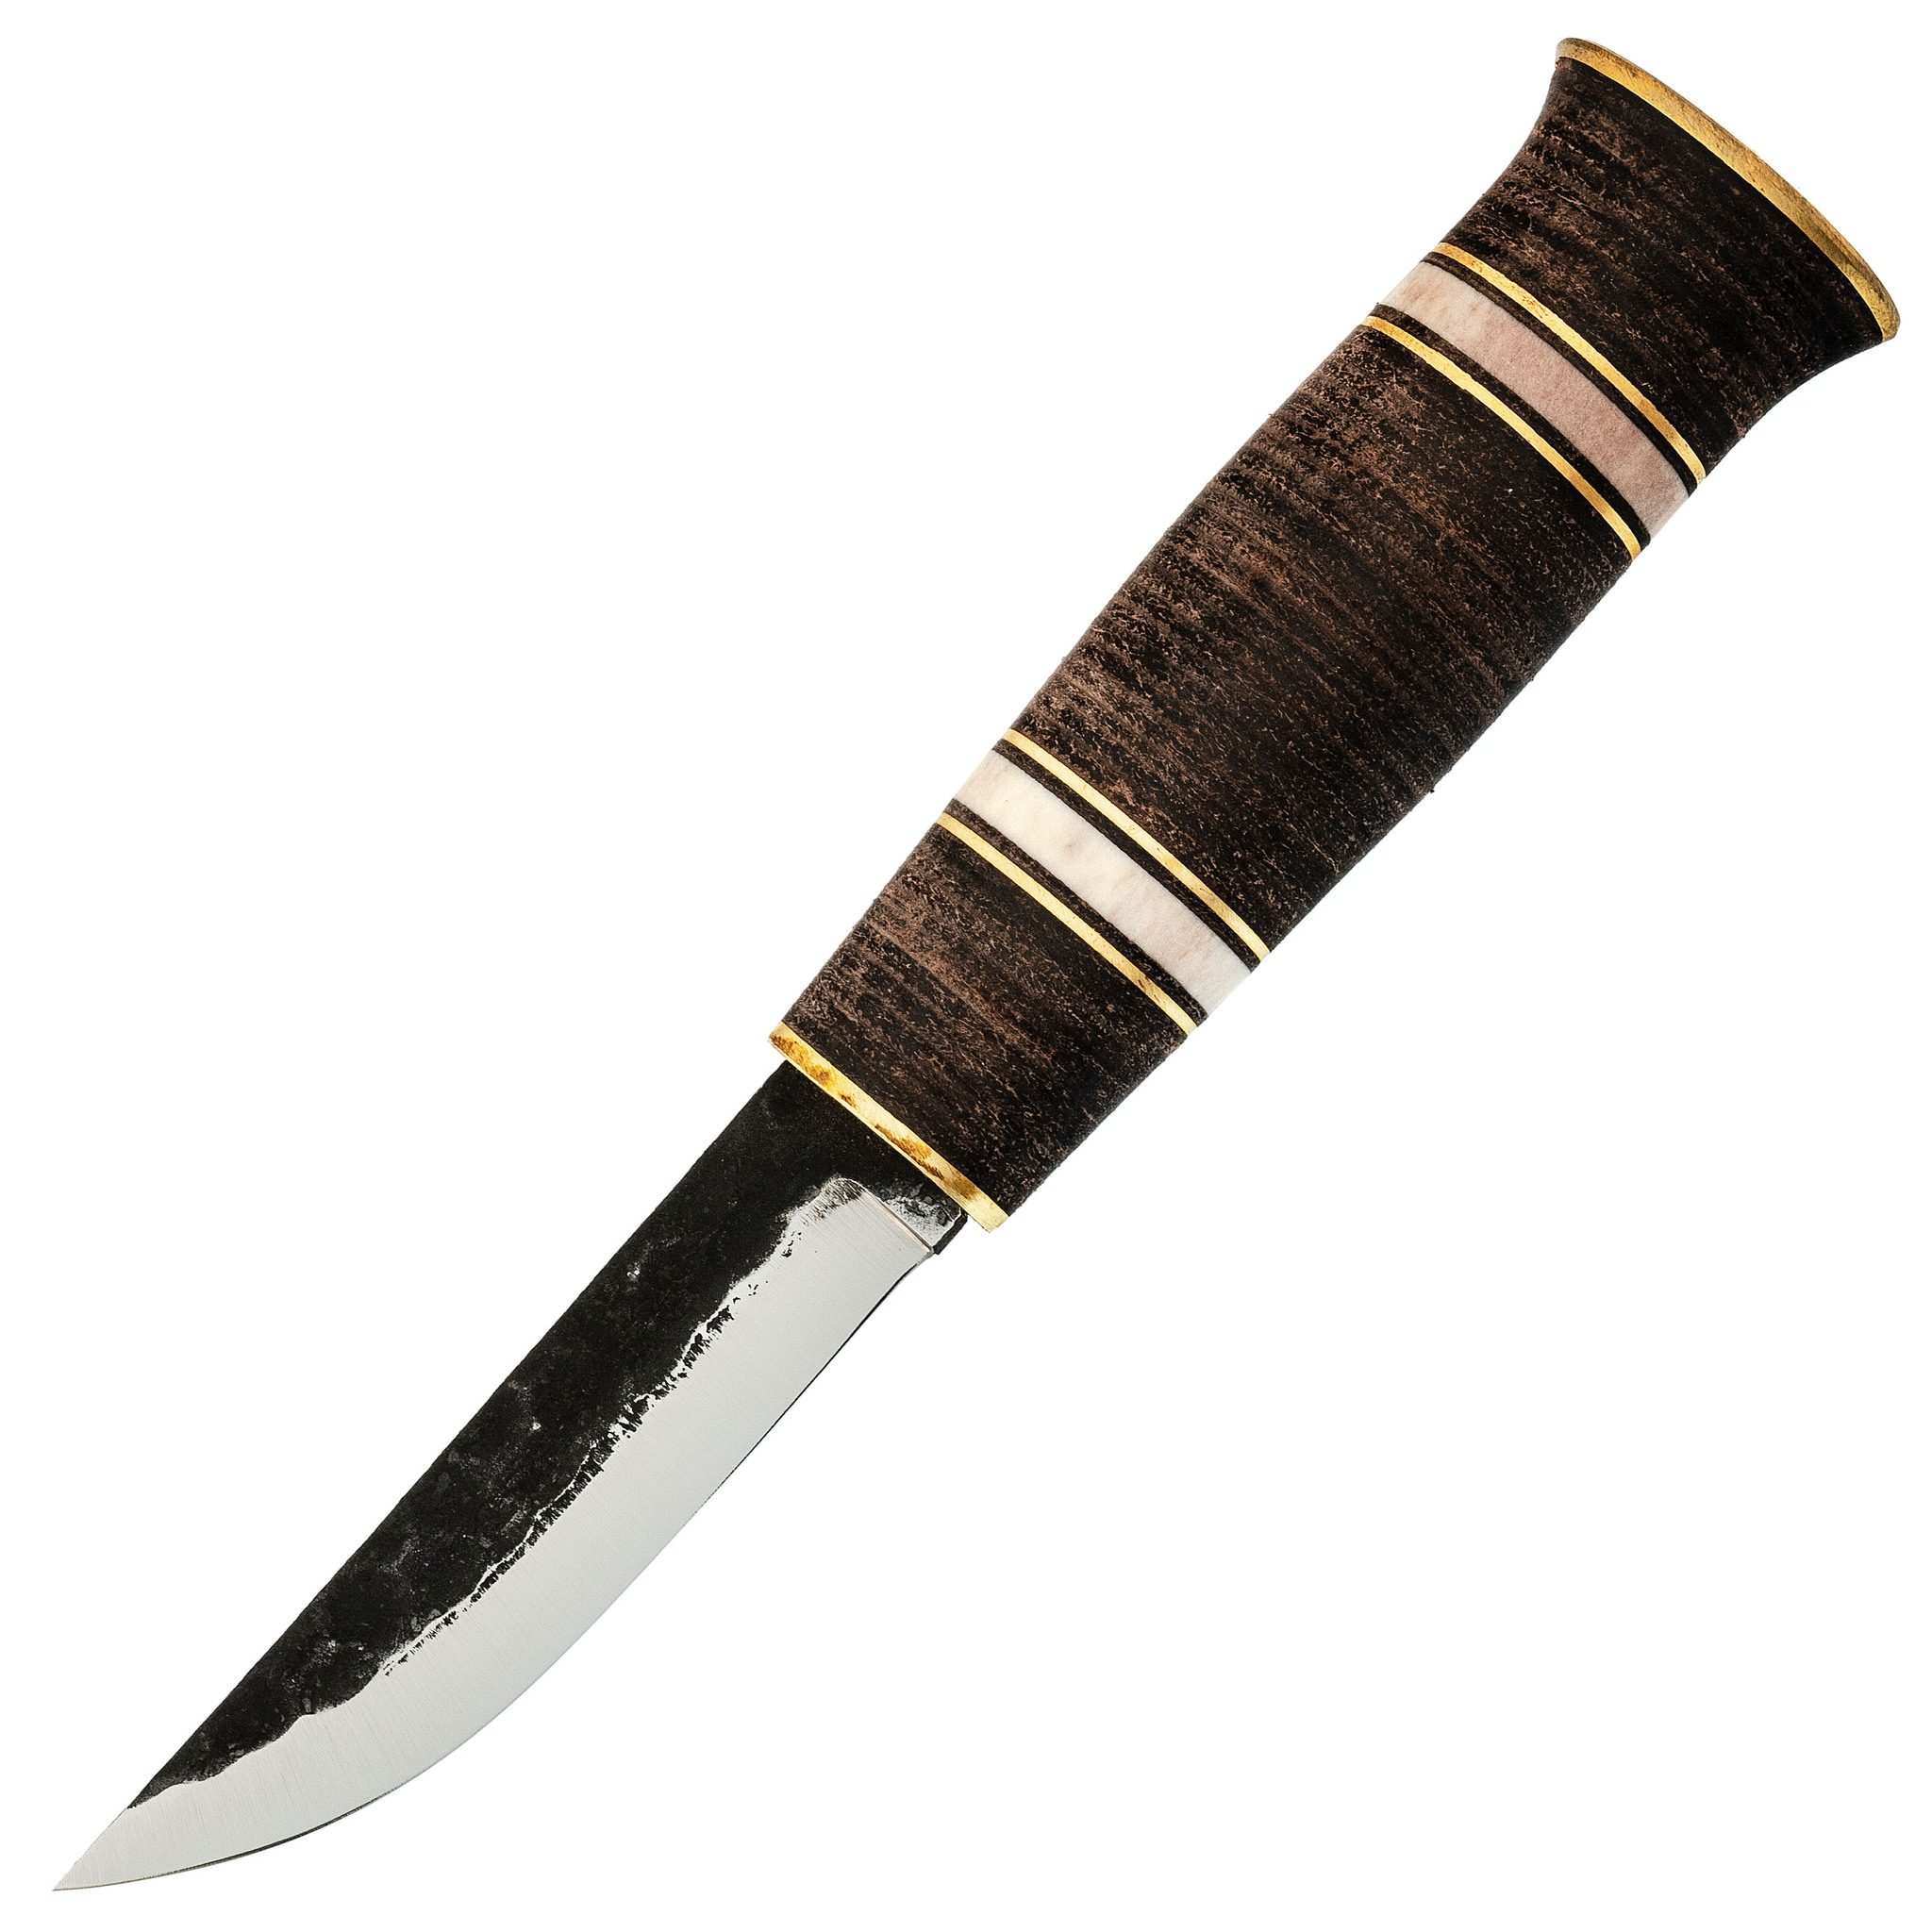 Нож Erpuu Puukko Leather 95, сталь 80CrV2, кожа/рог оленя - фото 1